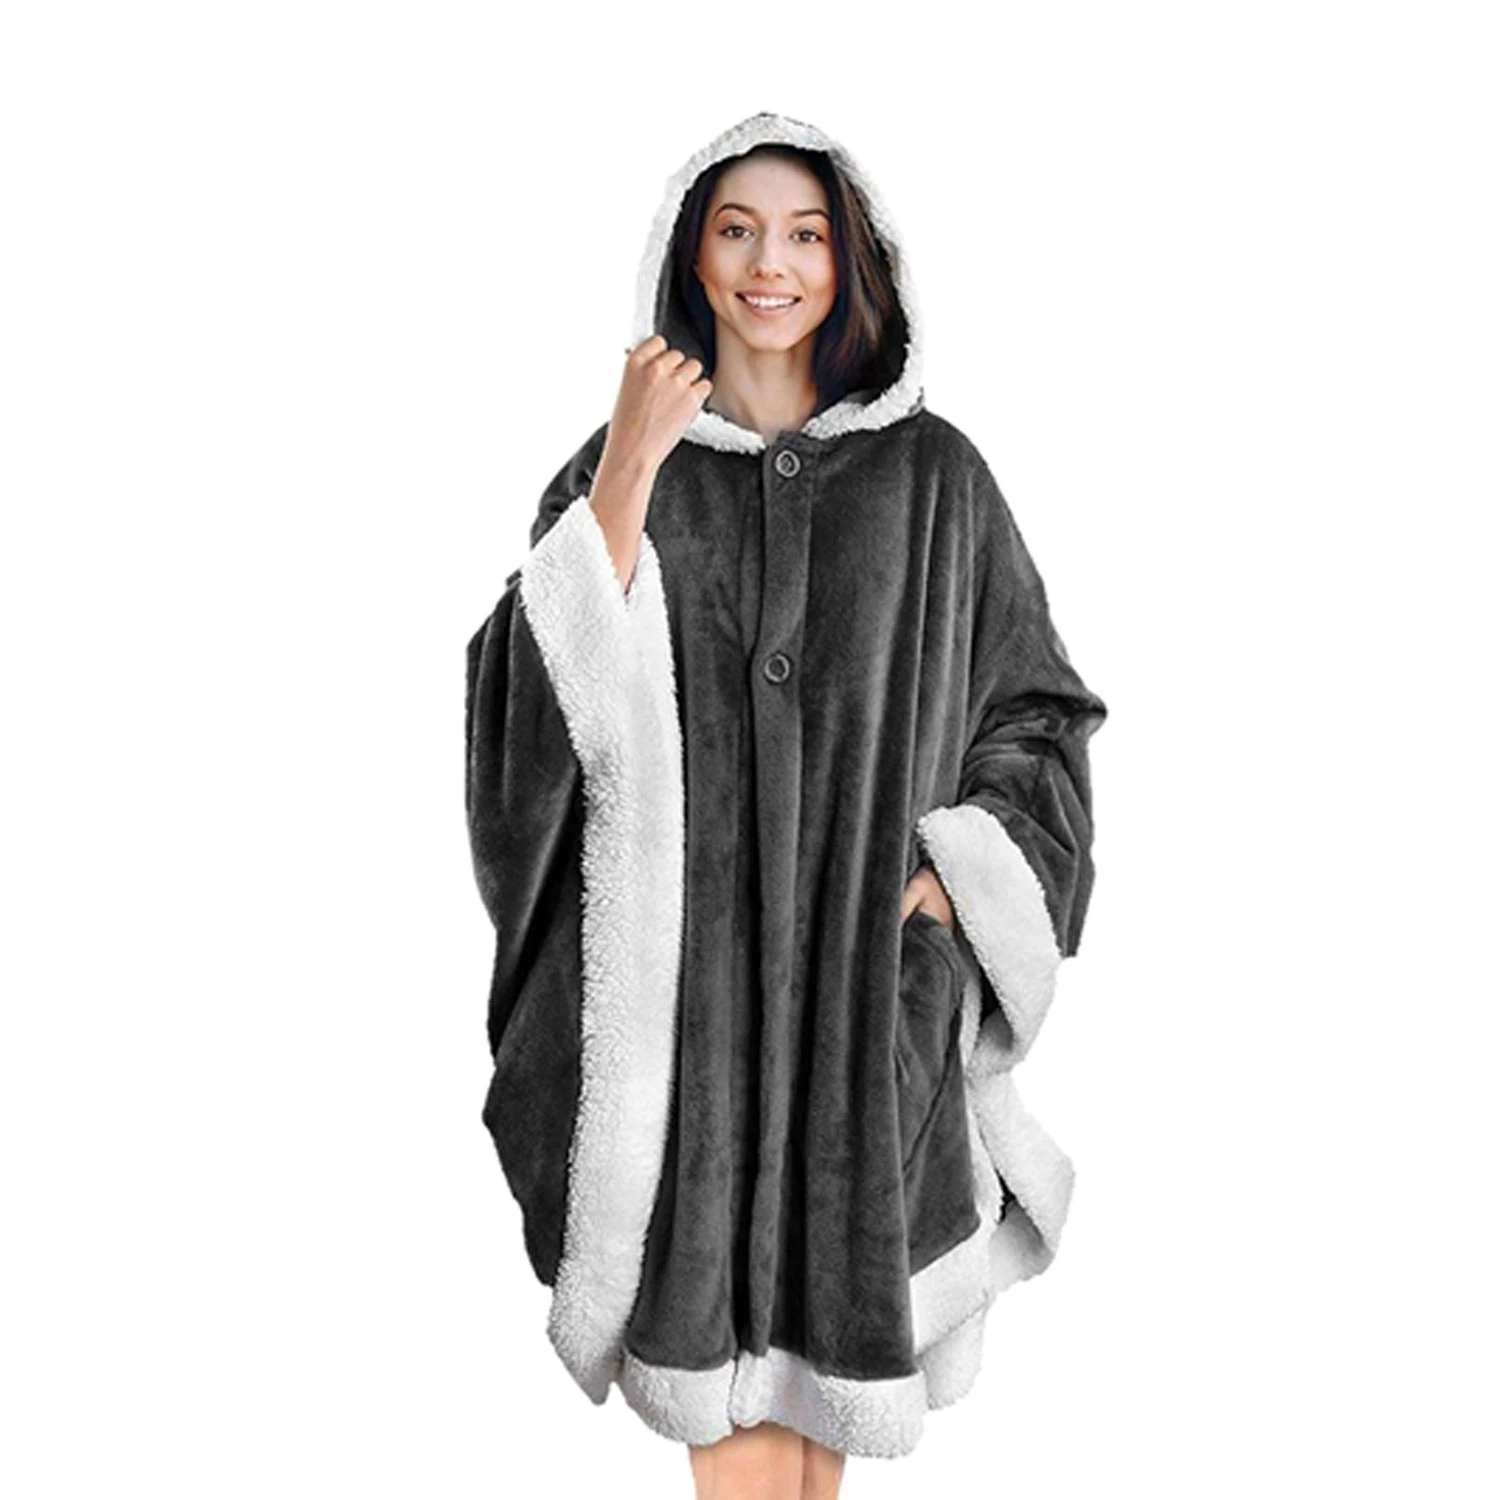 Hoodie Blanket Wrap Wearable Hoodie Snuggle Robe Sweatshirt Soft Lined Cuddle Poncho Cape